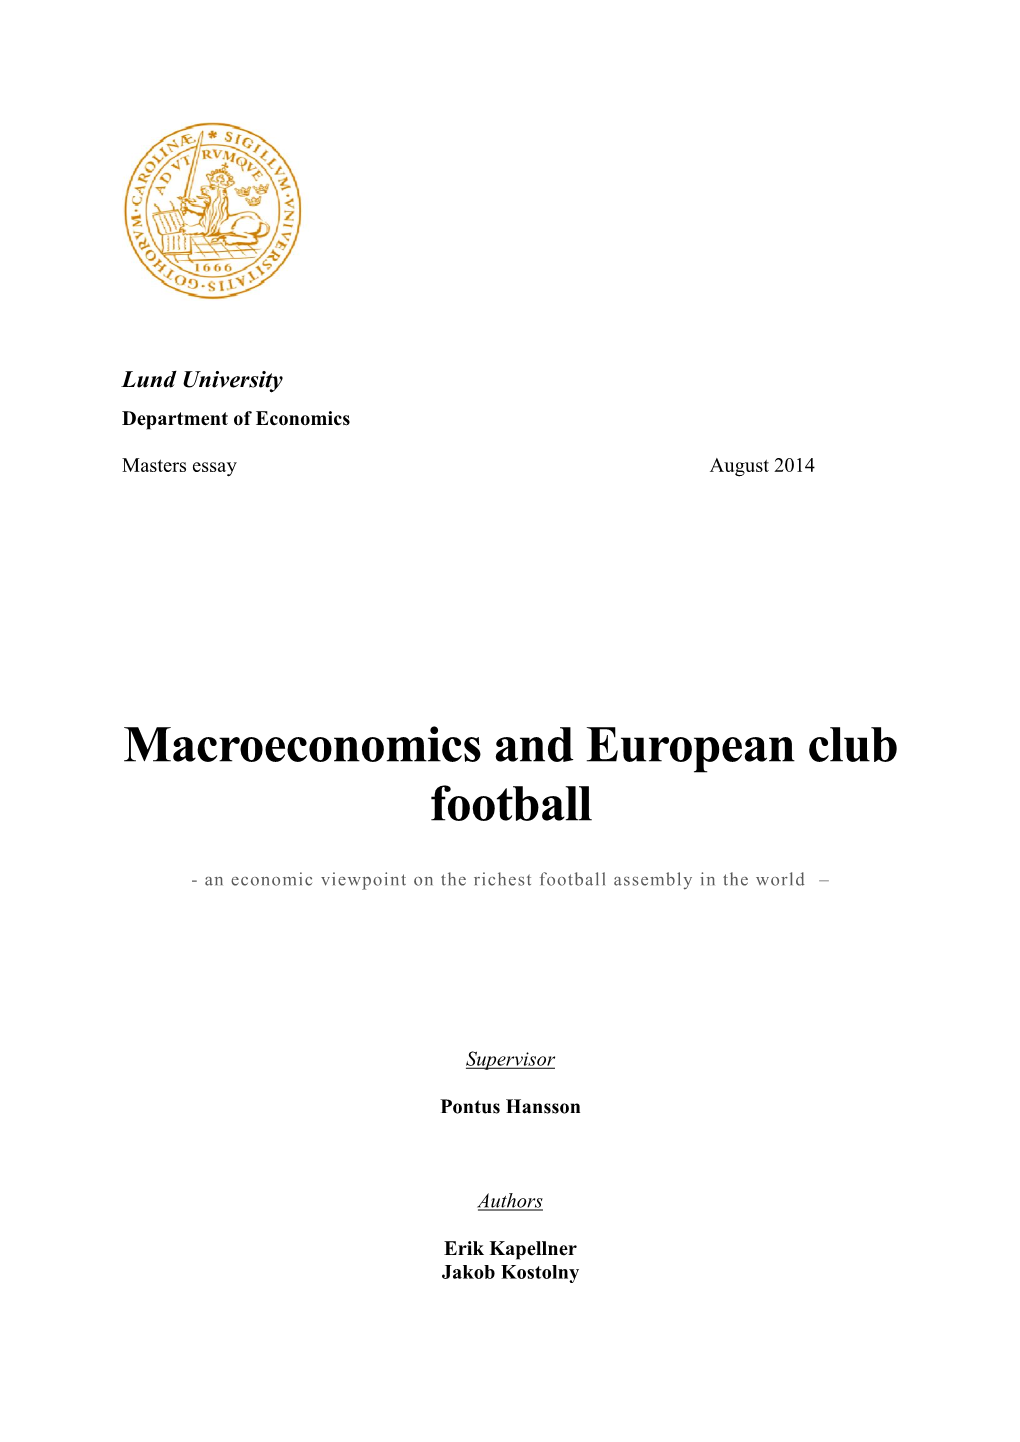 Macroeconomics and European Club Football